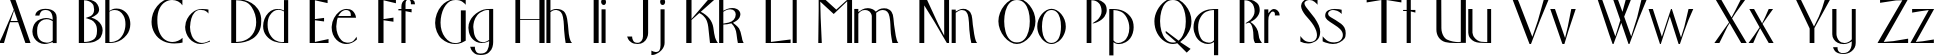 Пример написания английского алфавита шрифтом MiddlLight TYGRA